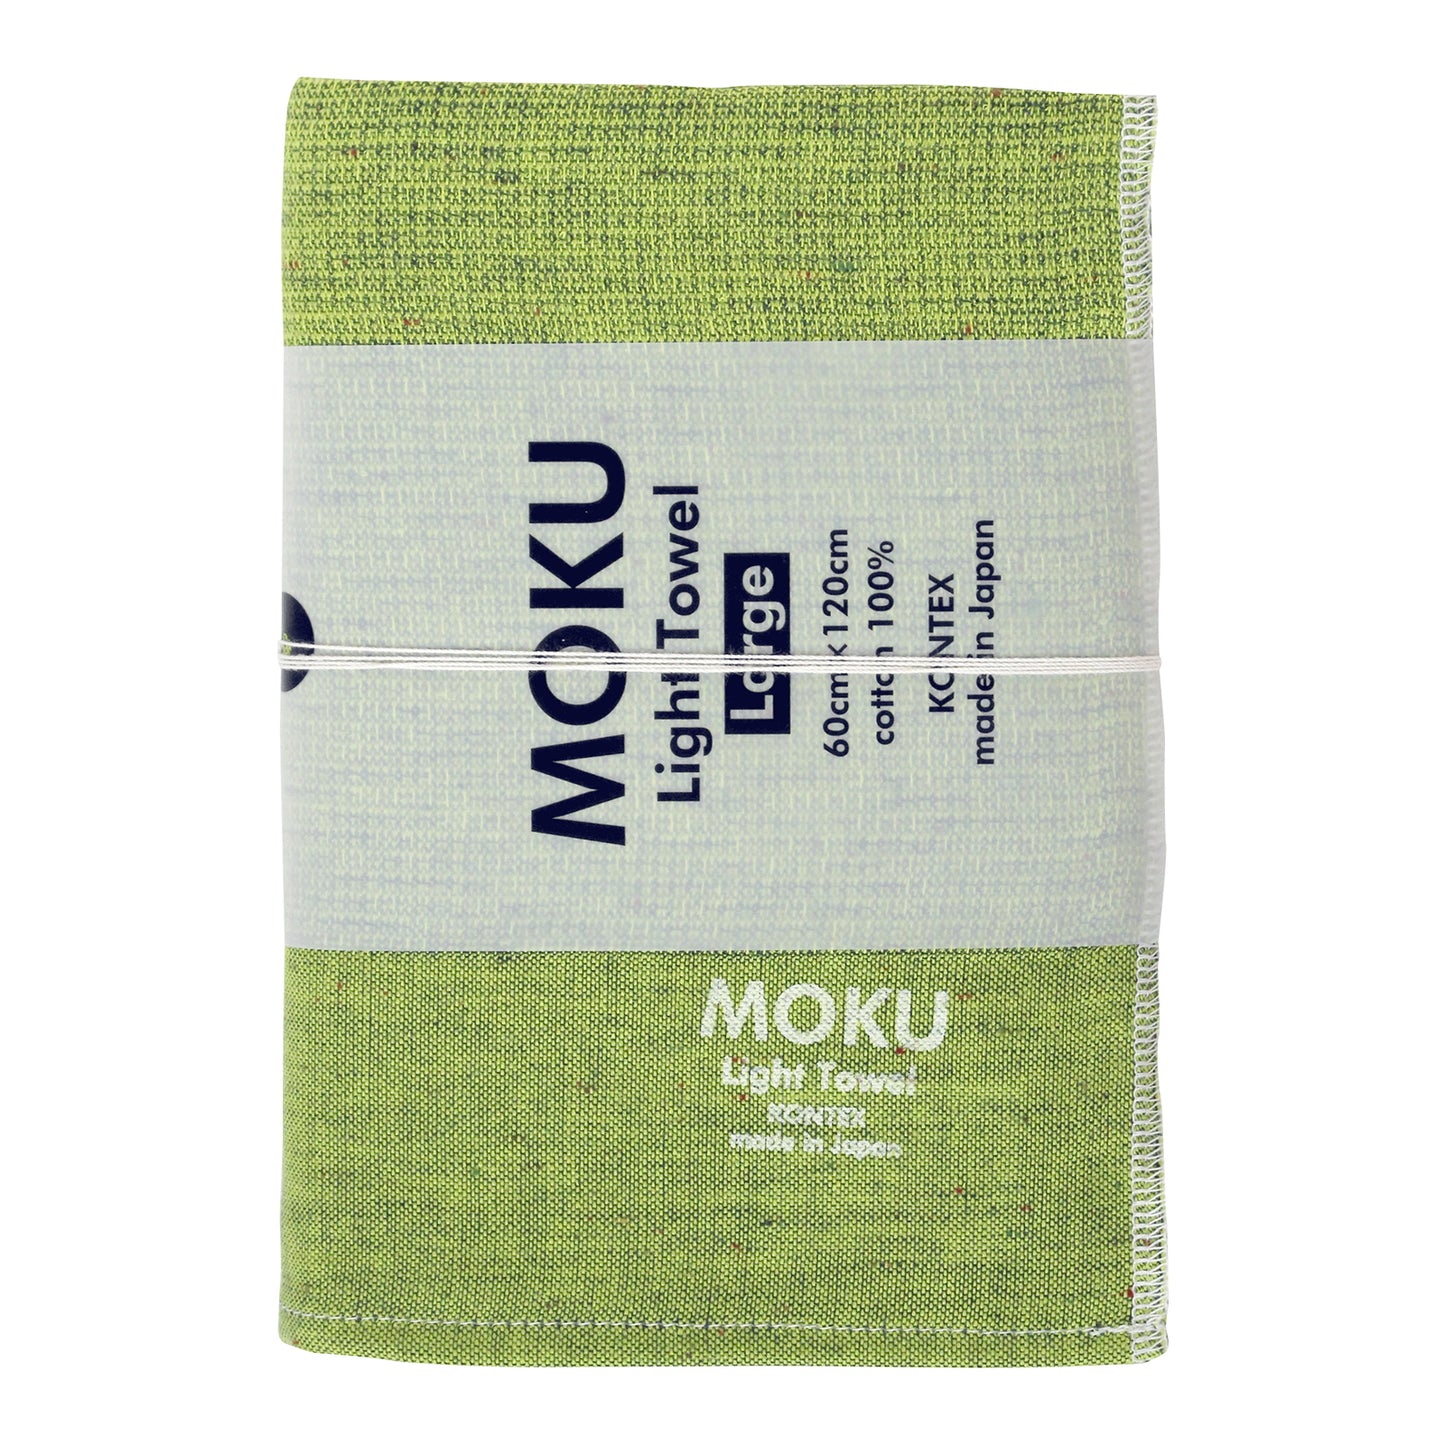 MOKU Towel